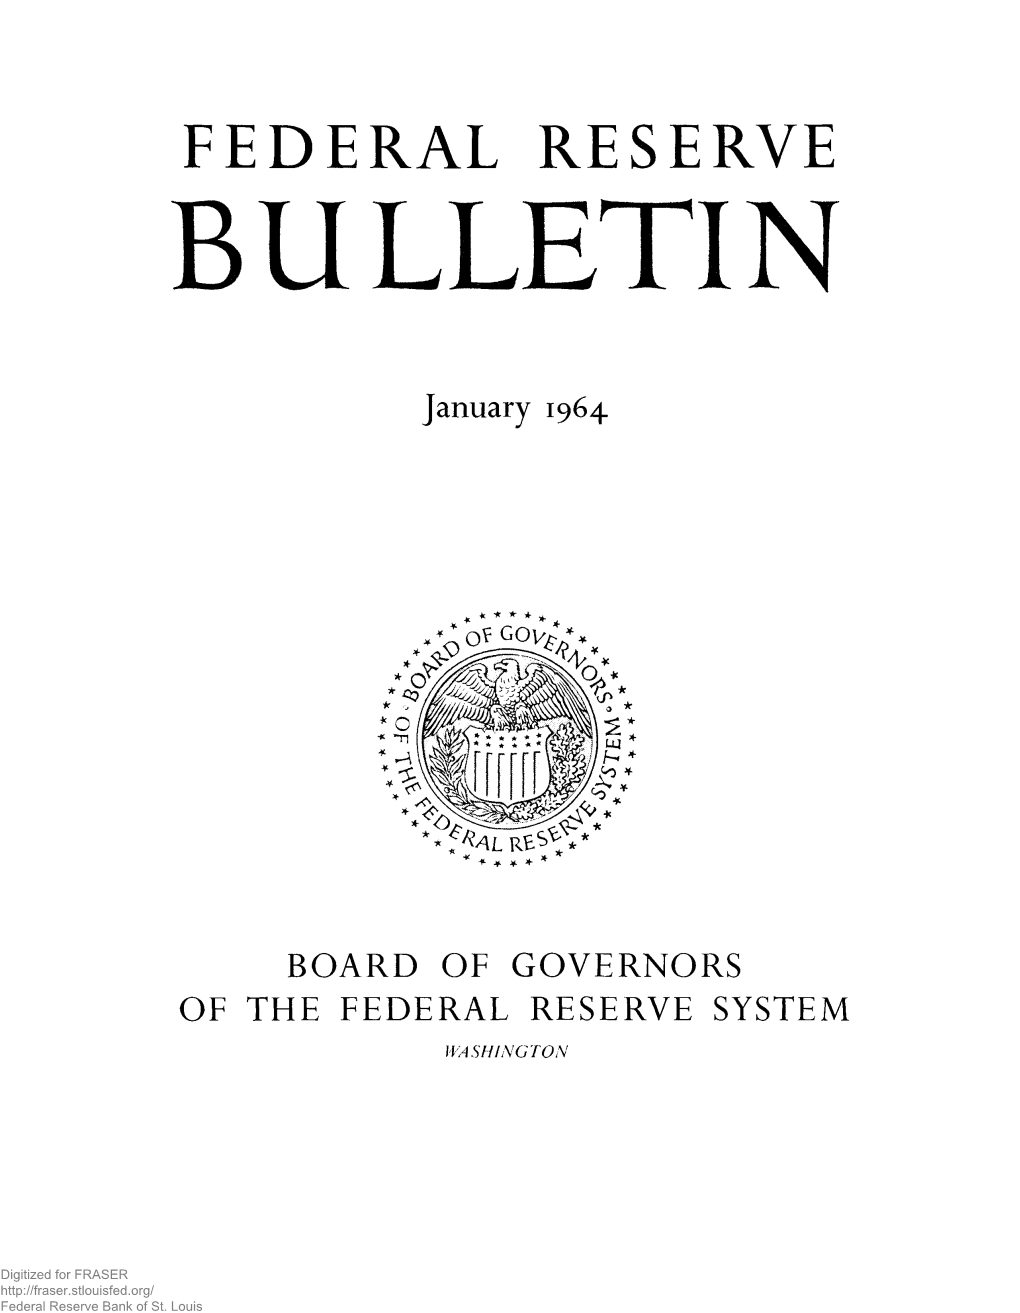 Federal Reserve Bulletin January 1964